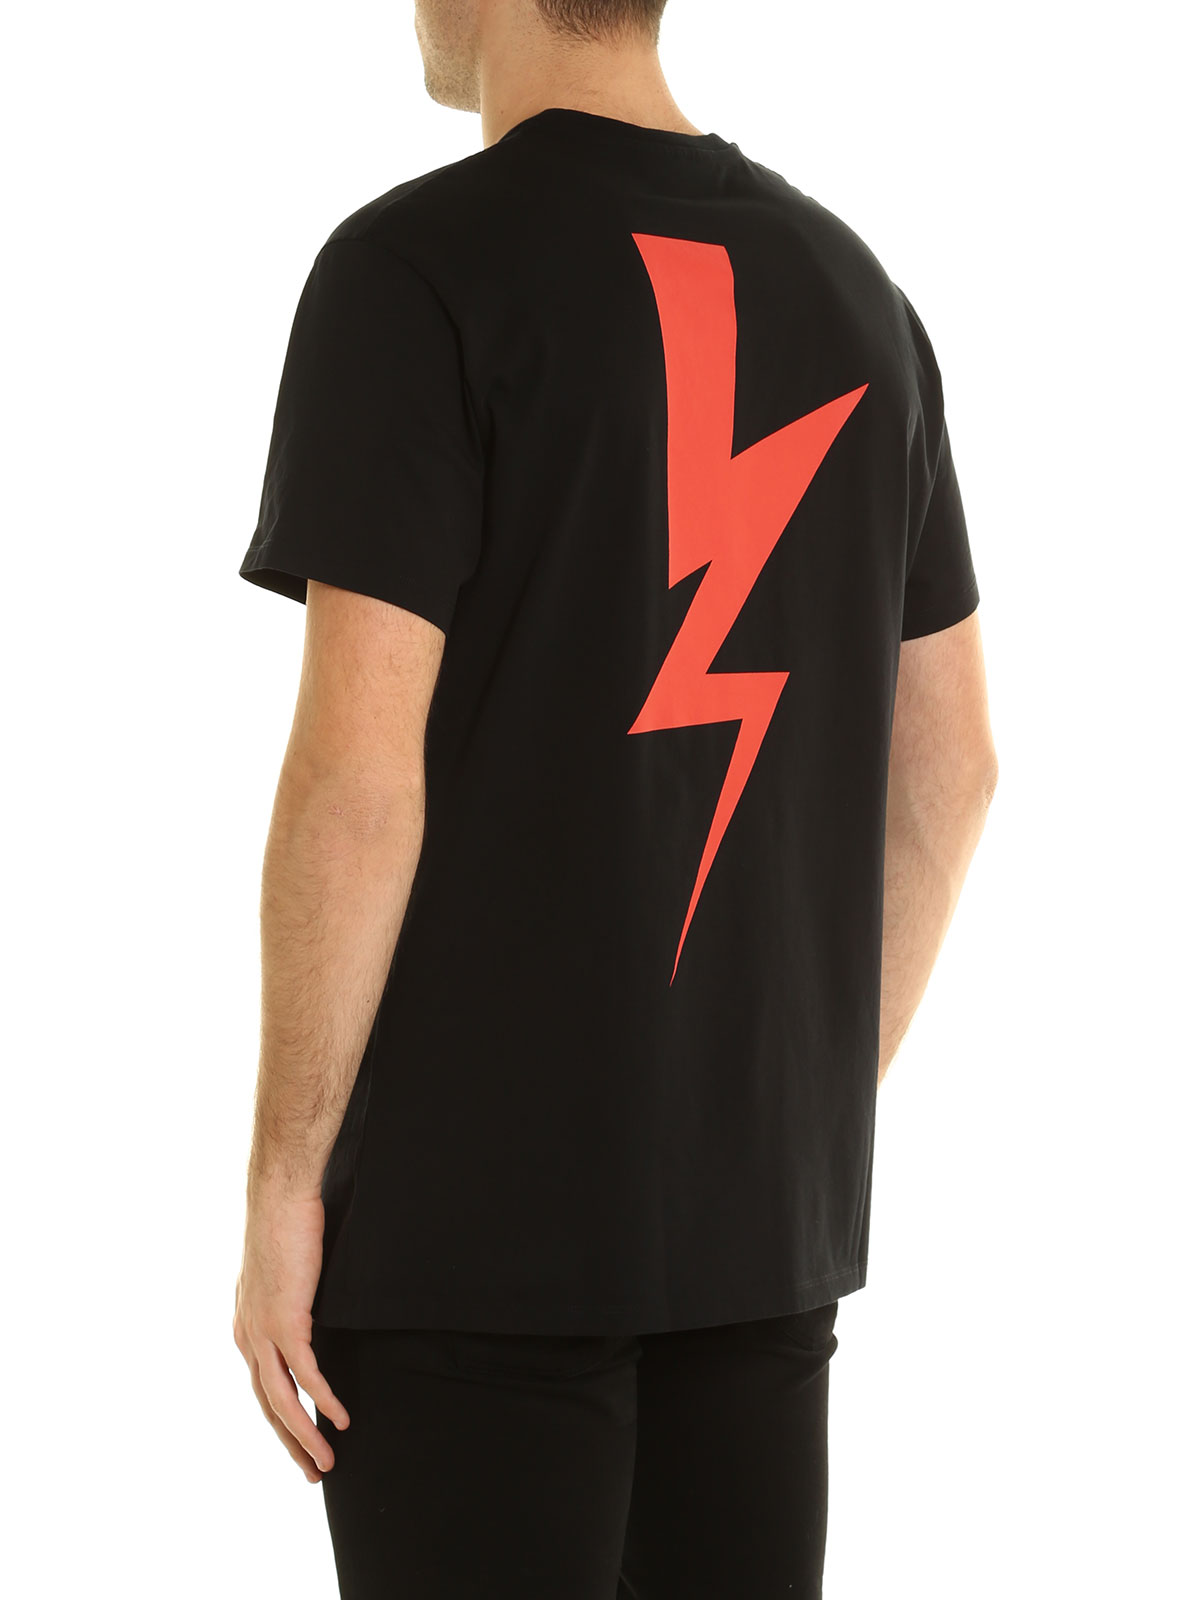 NEIL BARRETT, Lightning Bolt T Shirt, Men, Slim Fit T-Shirts